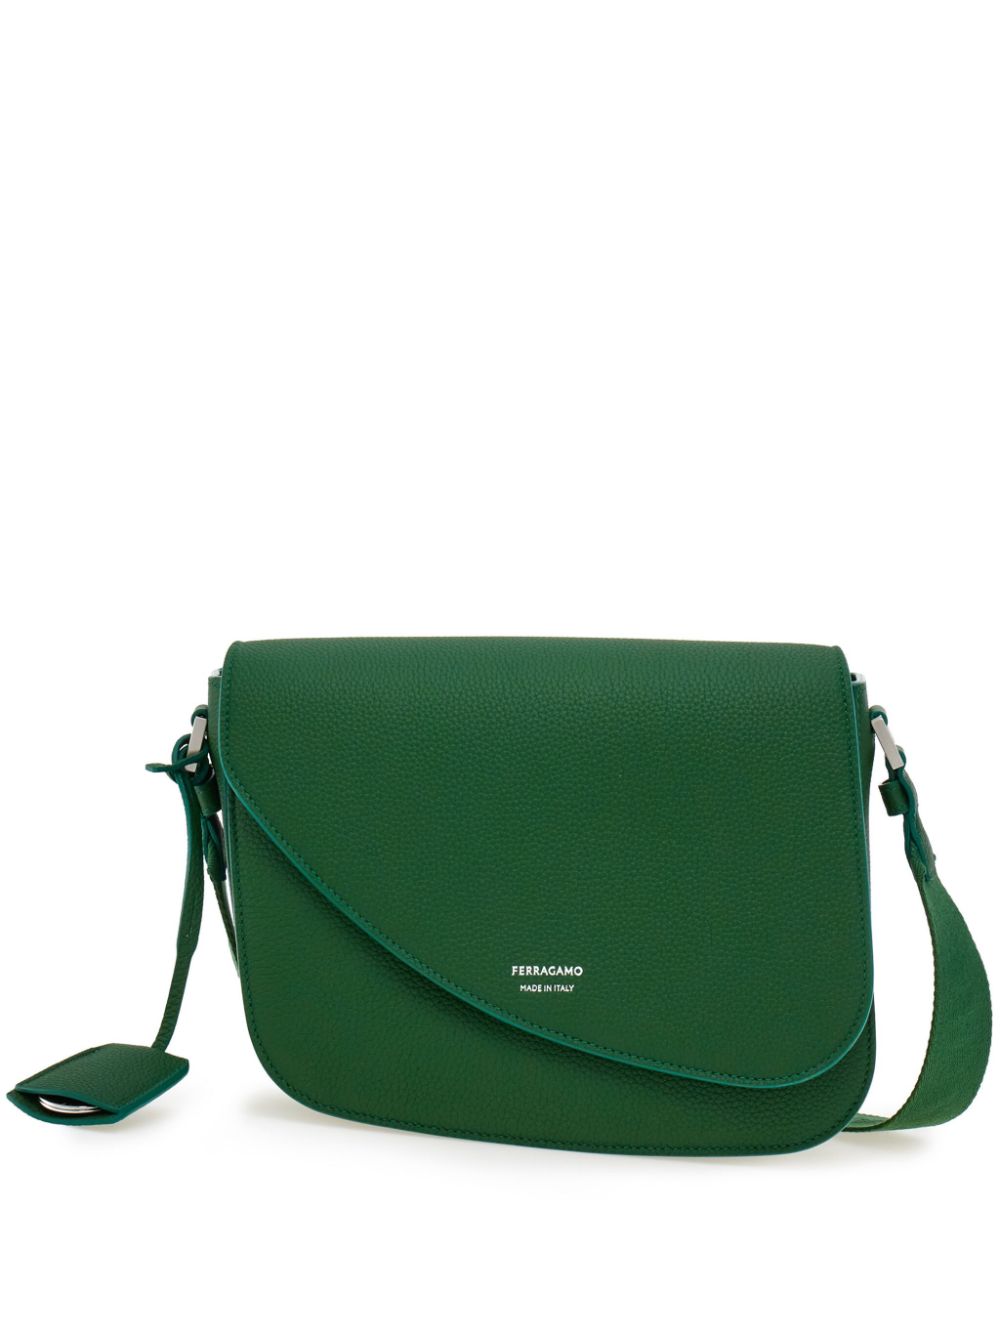 Ferragamo medium shoulder bag - Green von Ferragamo